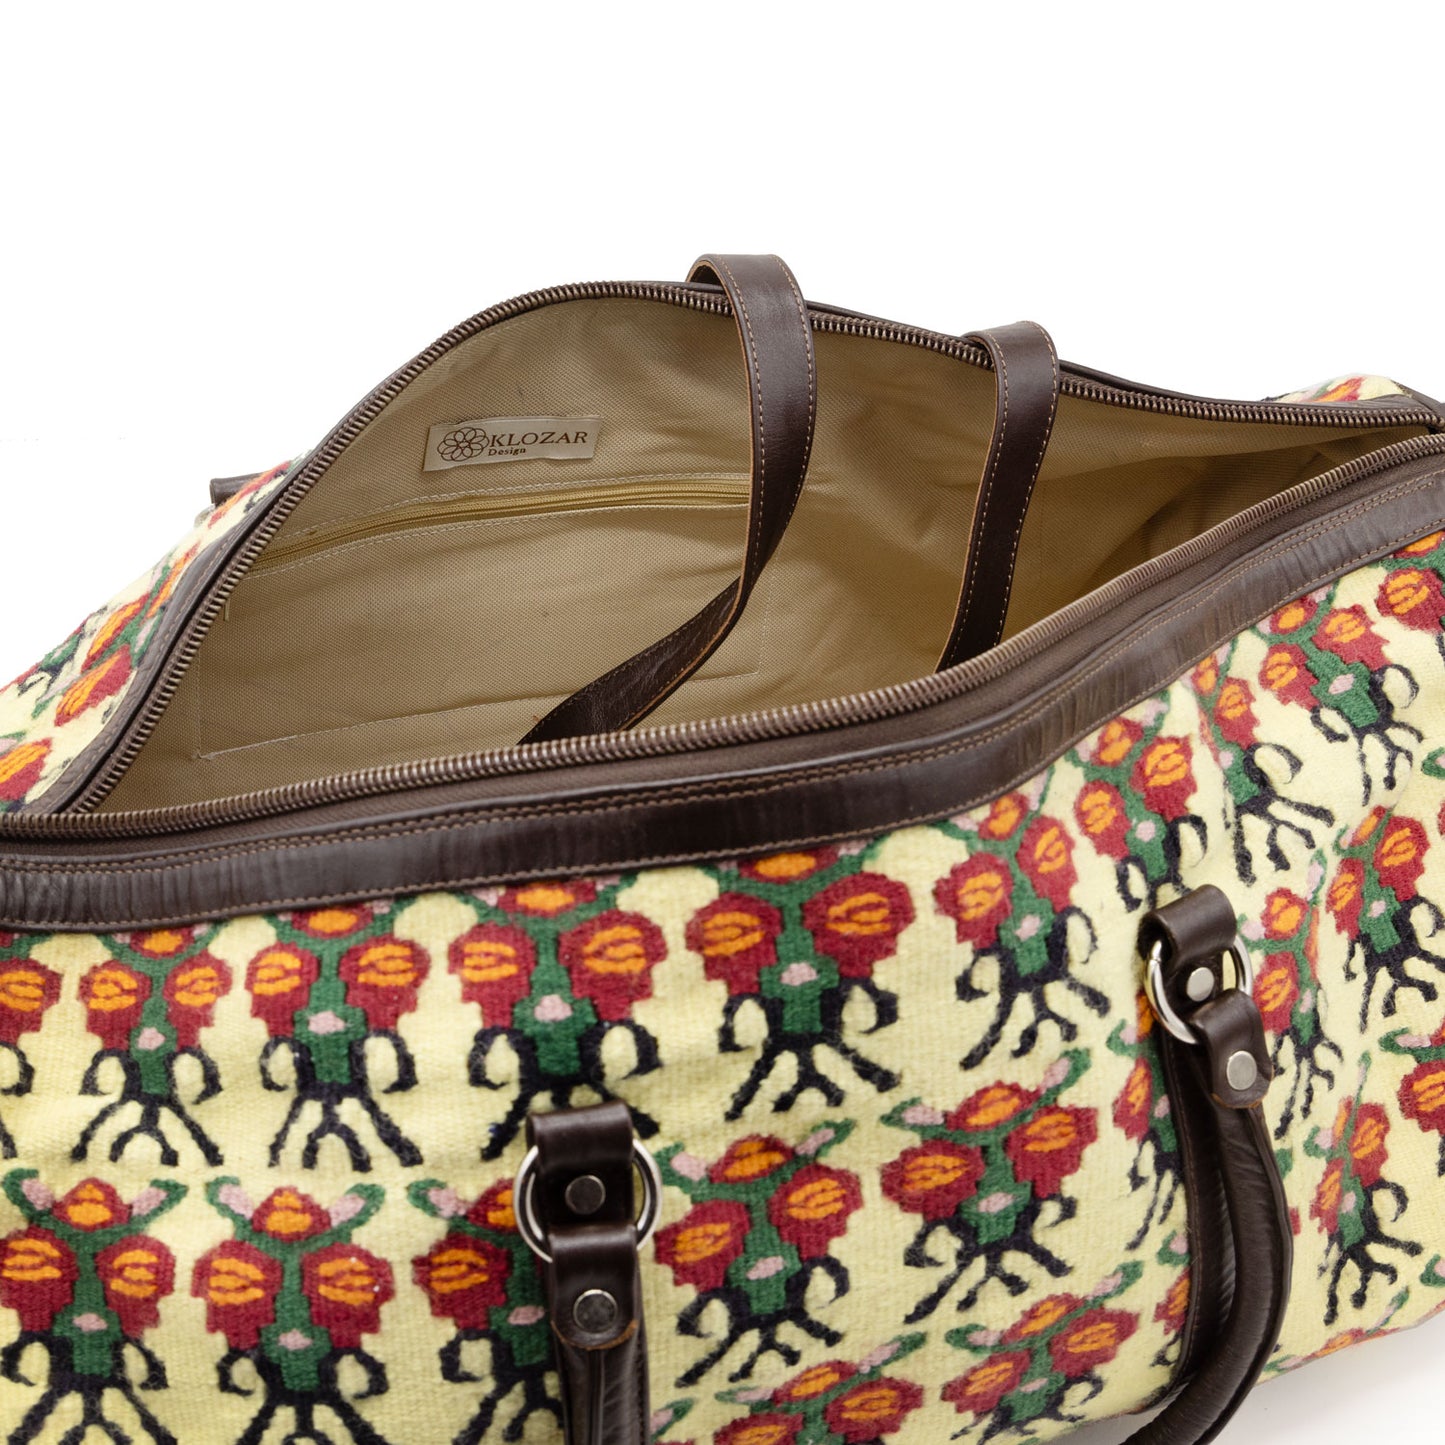 Woven Duffle Bag by Klozar - Flower Gelim